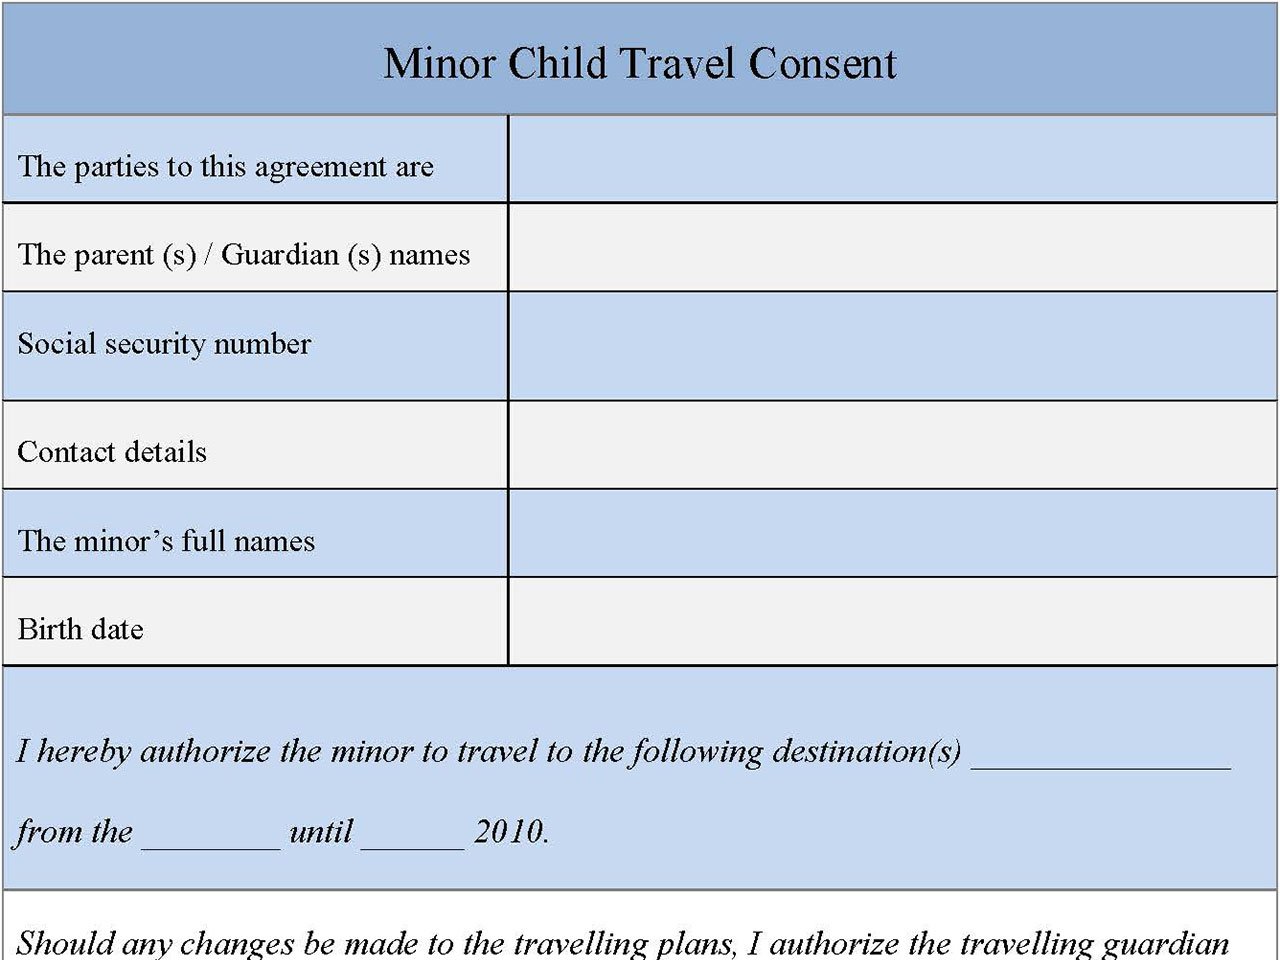 Minor Child Travel Consent Form